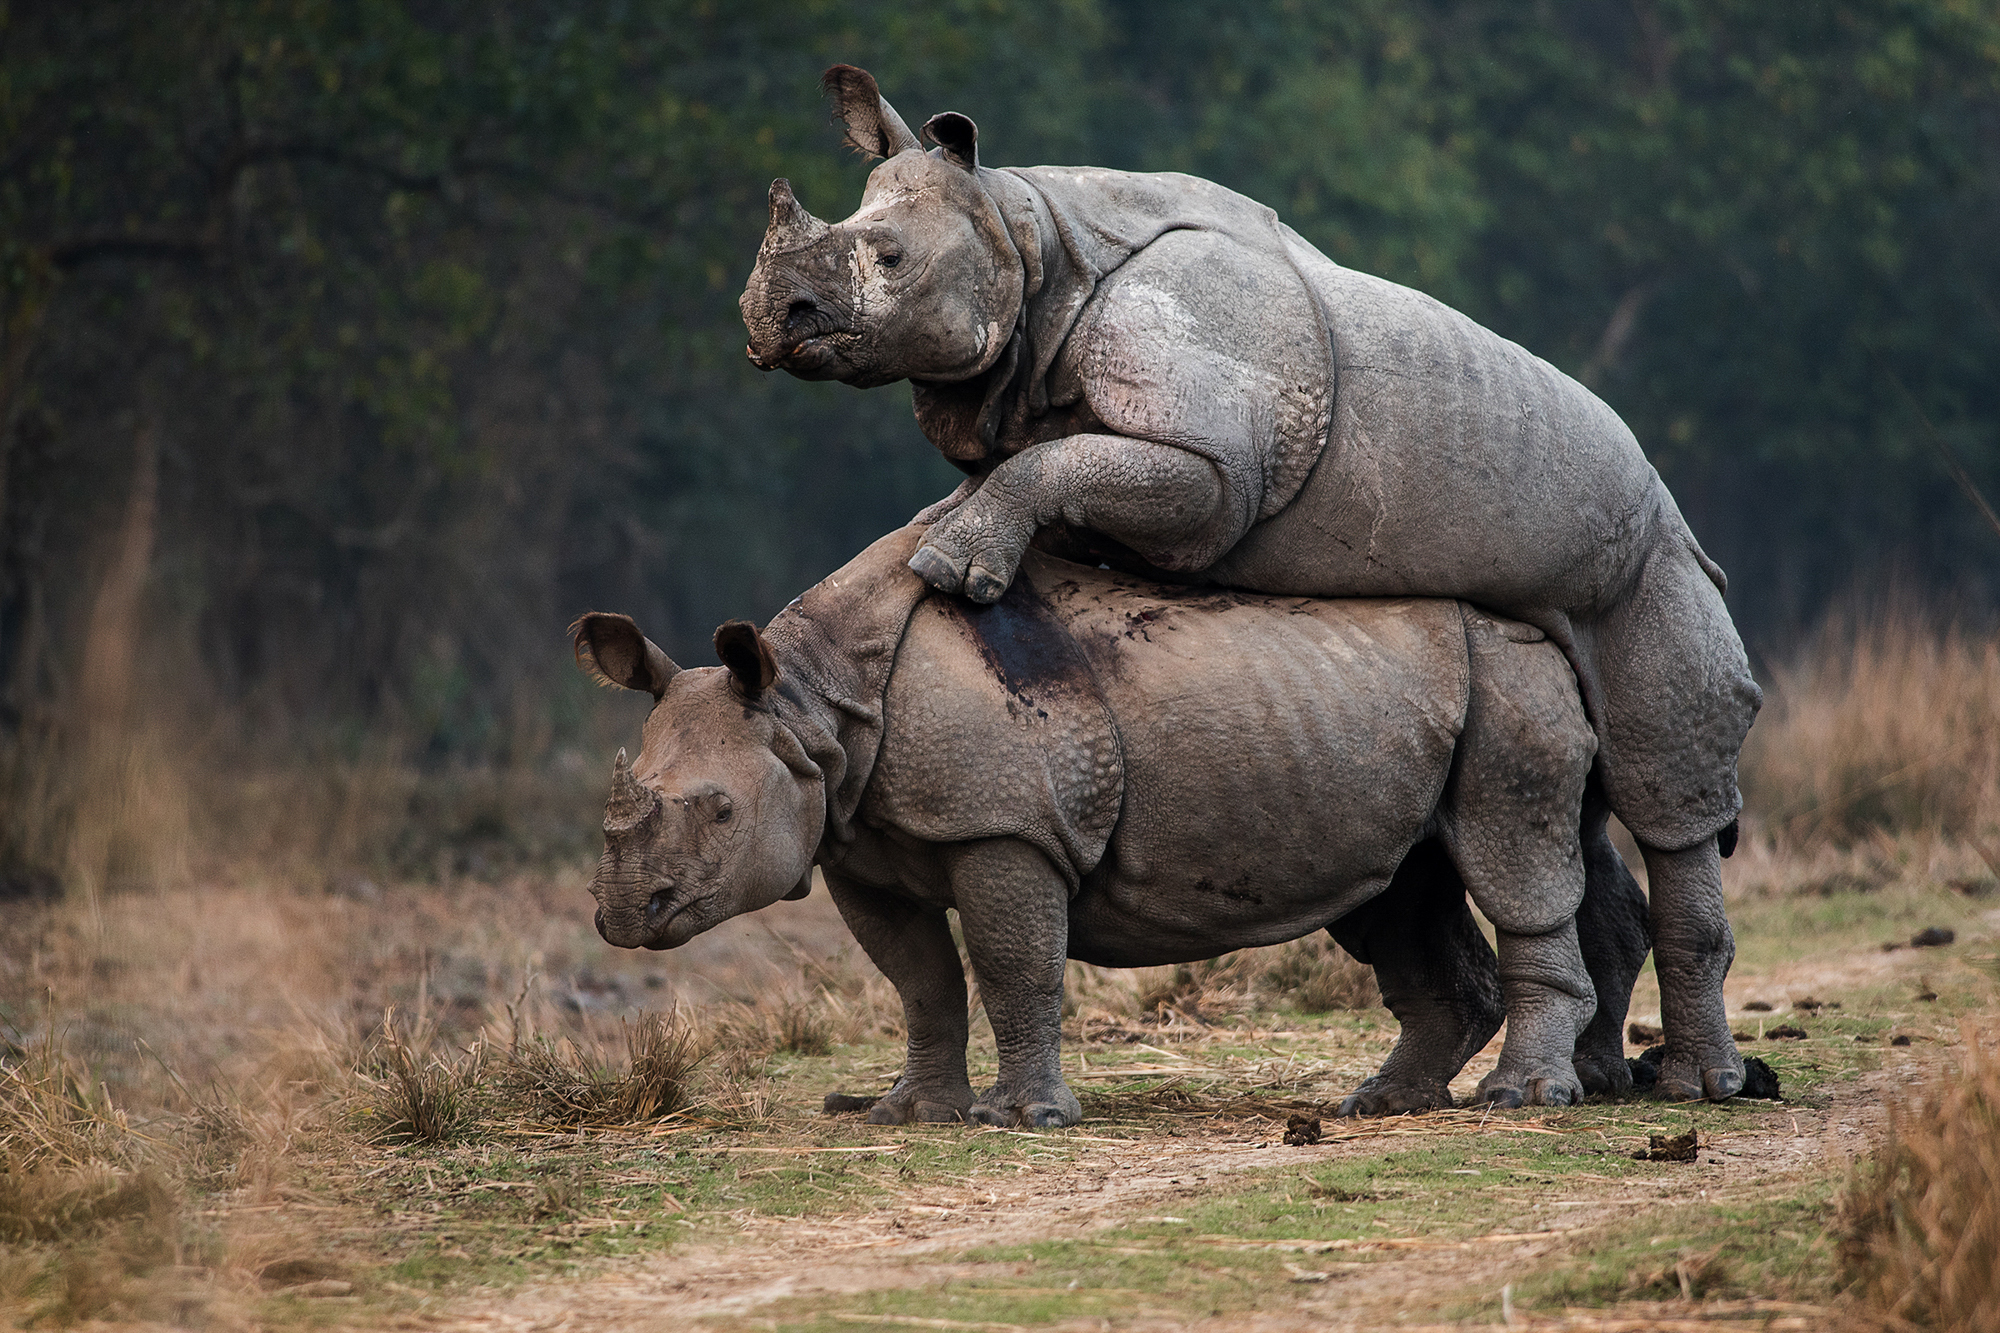 Rhino mating by Ashok Kumar Das.